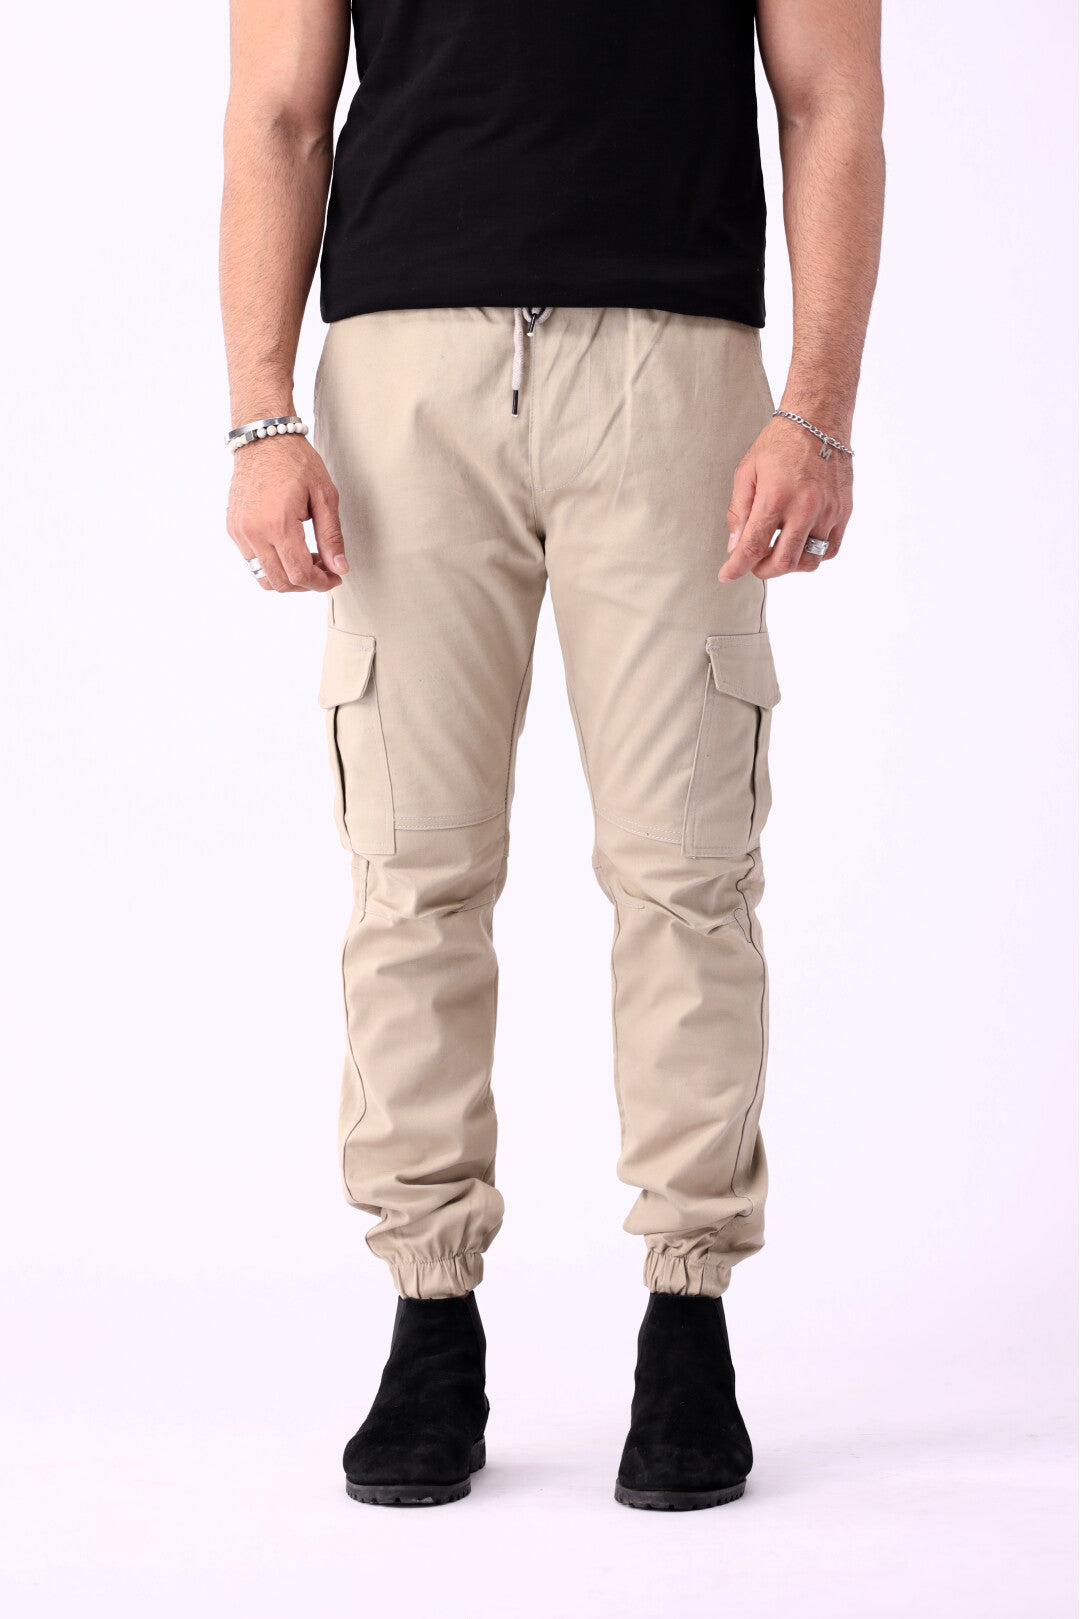 Grey's Anatomy By Barco Evolve Stretch Terra Women's 6-Pocket Cargo Jogger  Scrub Pants - Size S Desert Rouge Polyester… | Scrub pants, Cargo joggers,  Dickies scrubs